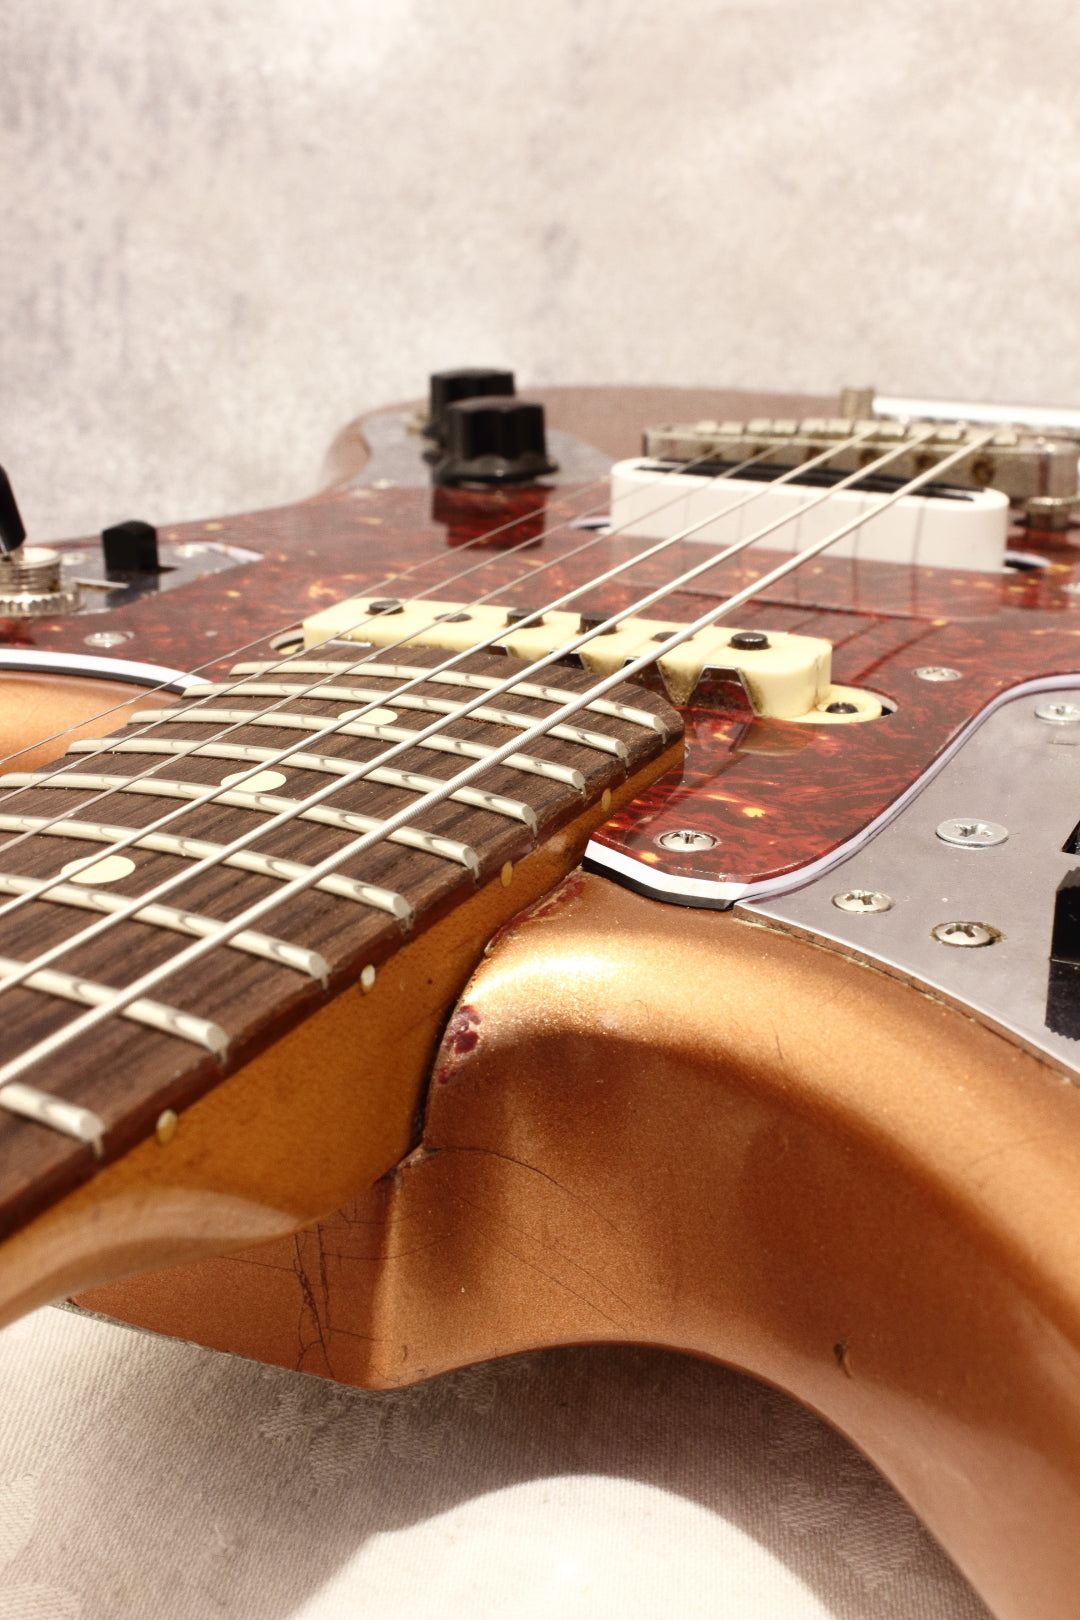 Fender American Vintage '62 Jaguar Copper Metallic 2000